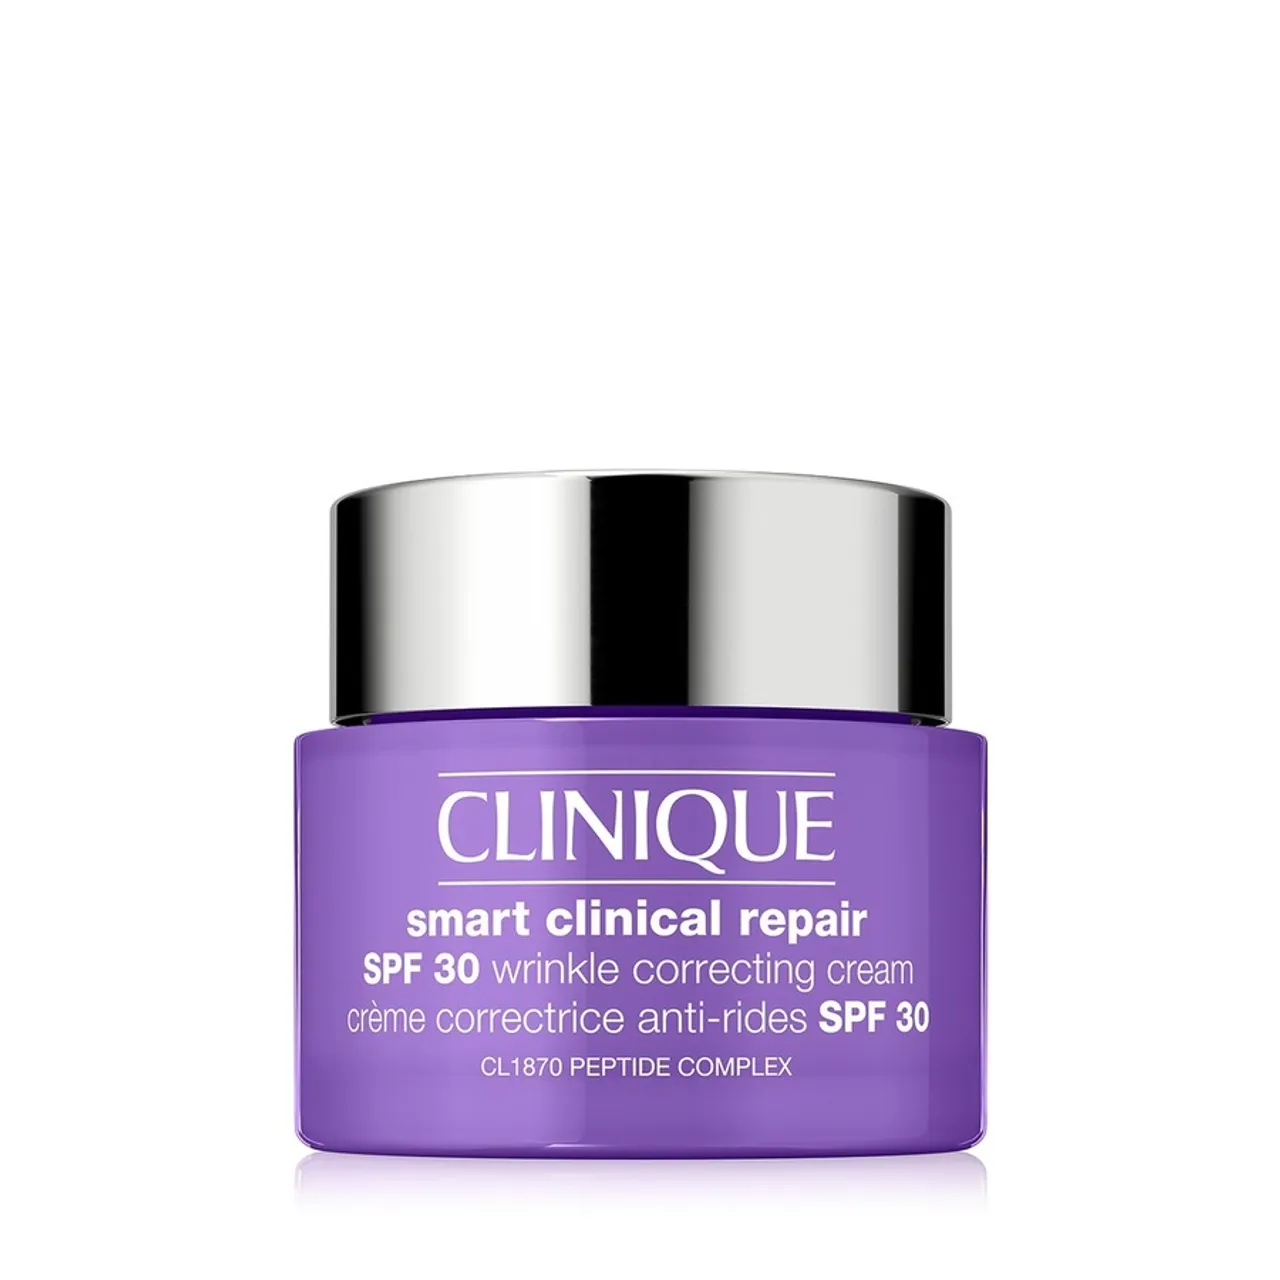 Clinical Repair Wrinkle Correcting Cream SPF 30